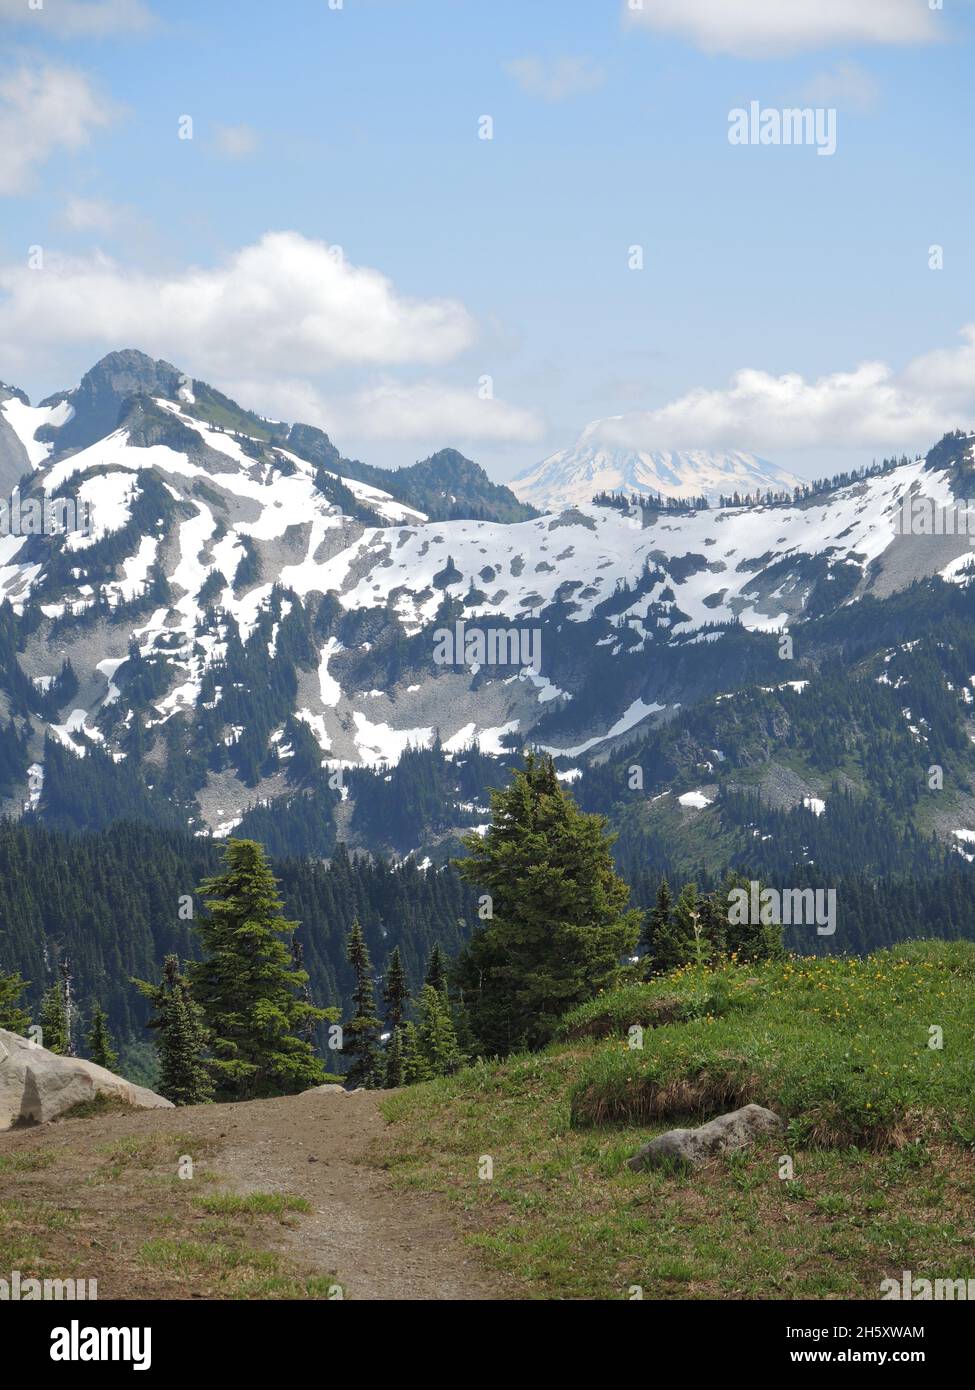 Scenic snowy mountainscape in Mount Rainier National Park, Washington State Stock Photo